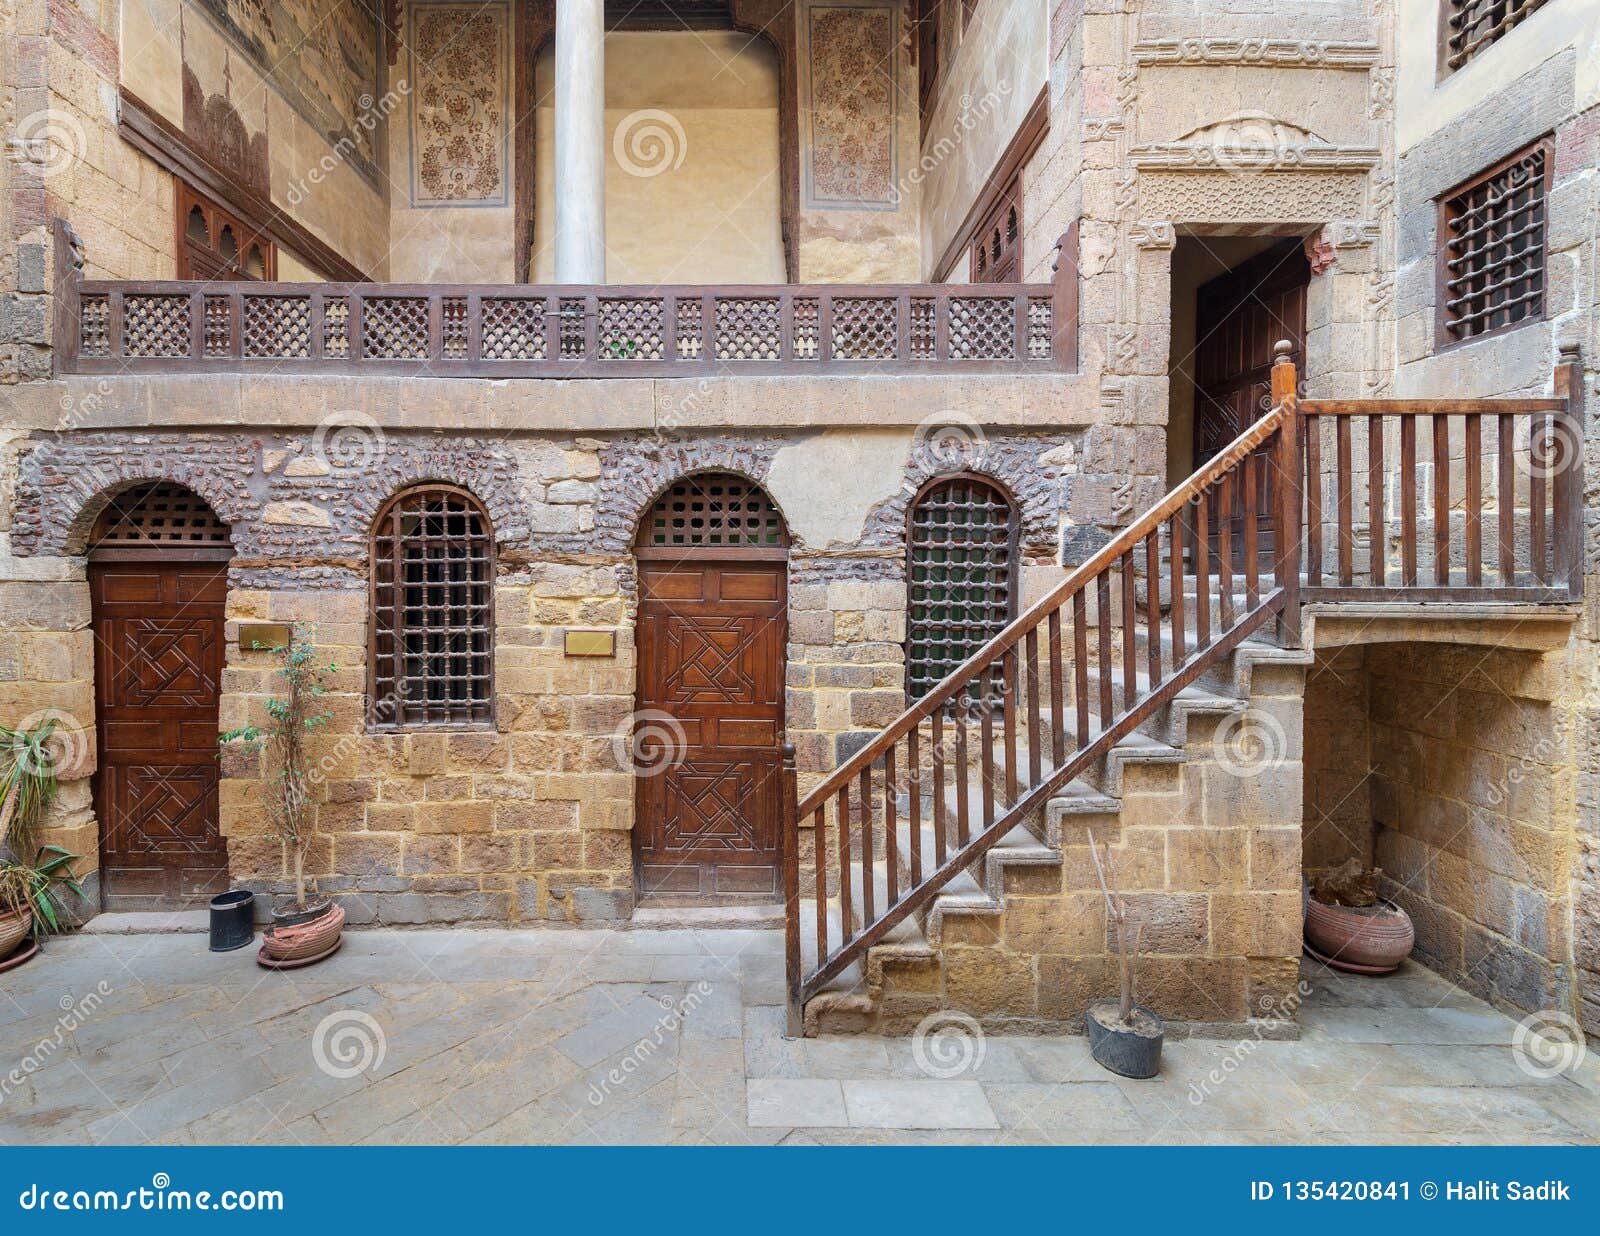 courtyard of ottoman historic beit el set waseela building waseela hanem house, located in darb al-ahmar district, cairo, egypt